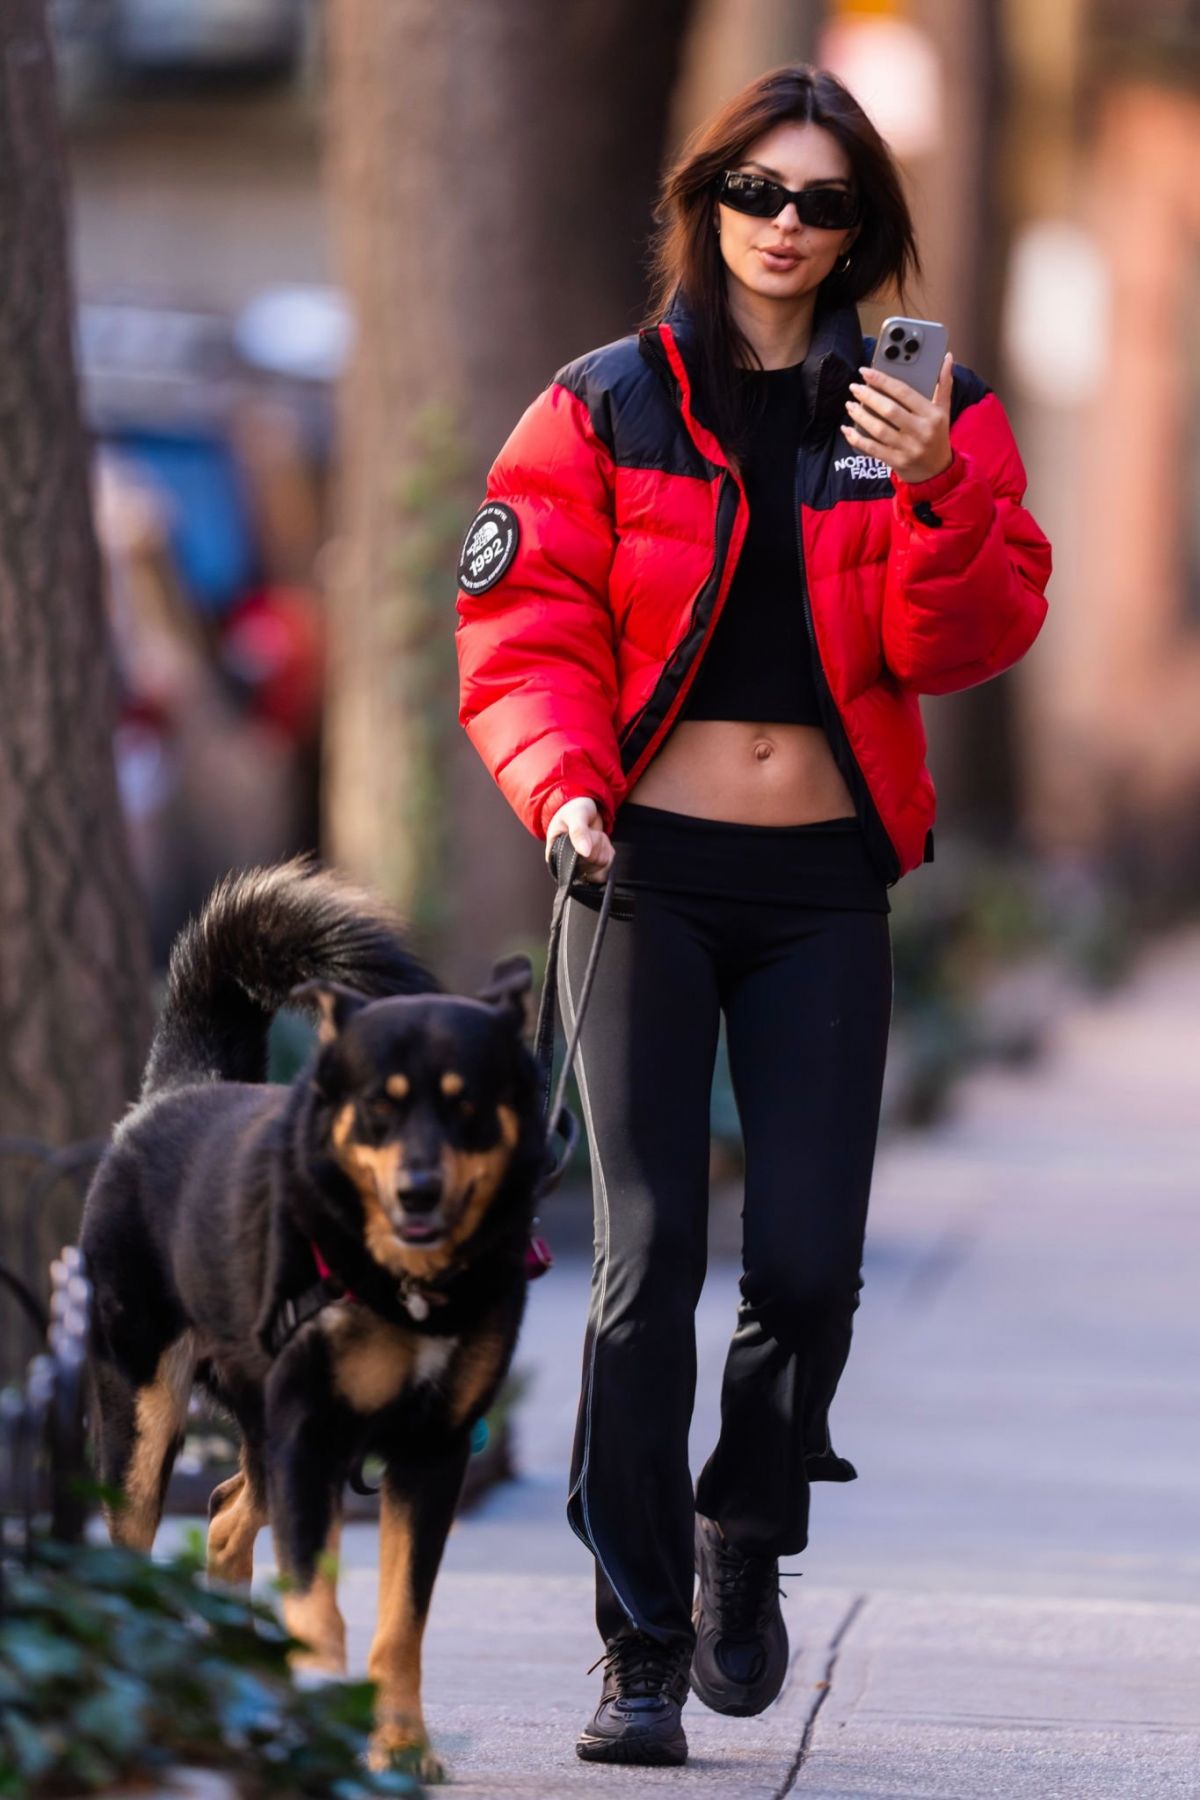 Emily Ratajkowski in Red Puffer & Black Pants While Walking Her Dog